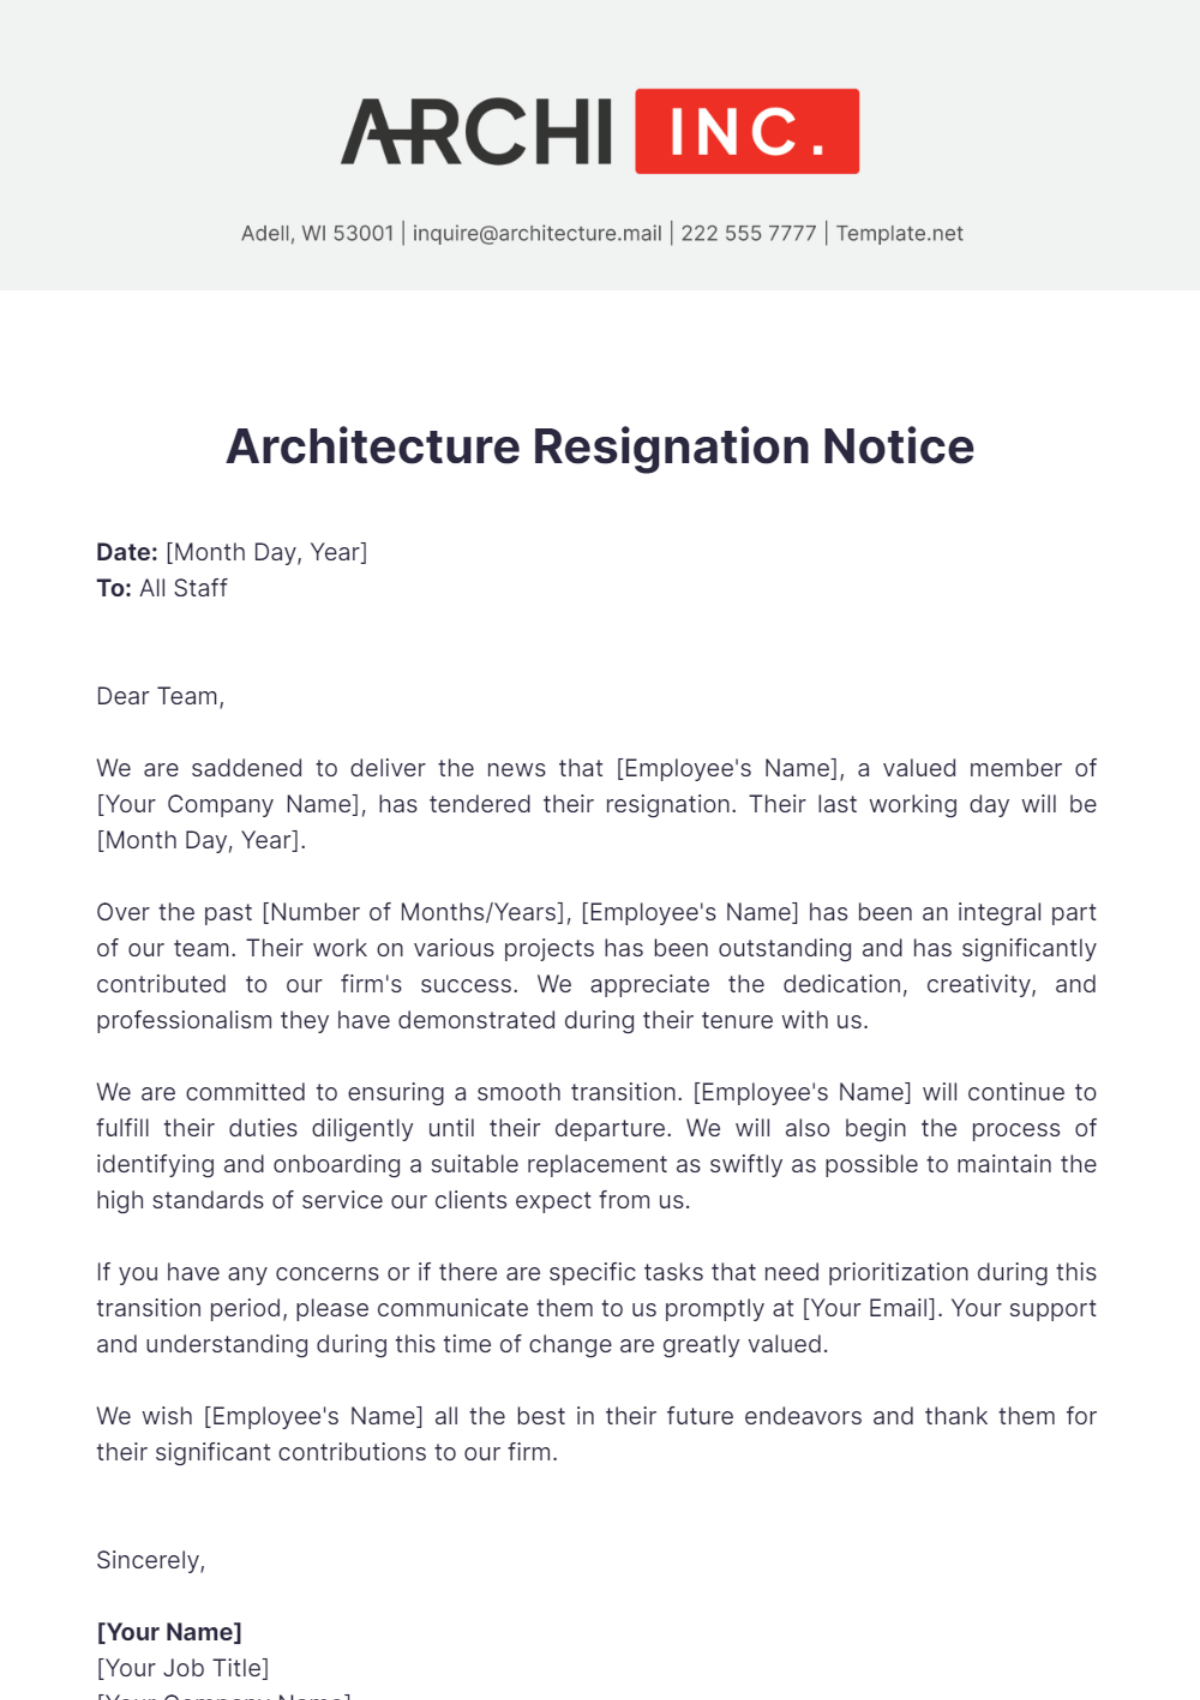 Free Architecture Resignation Notice Template